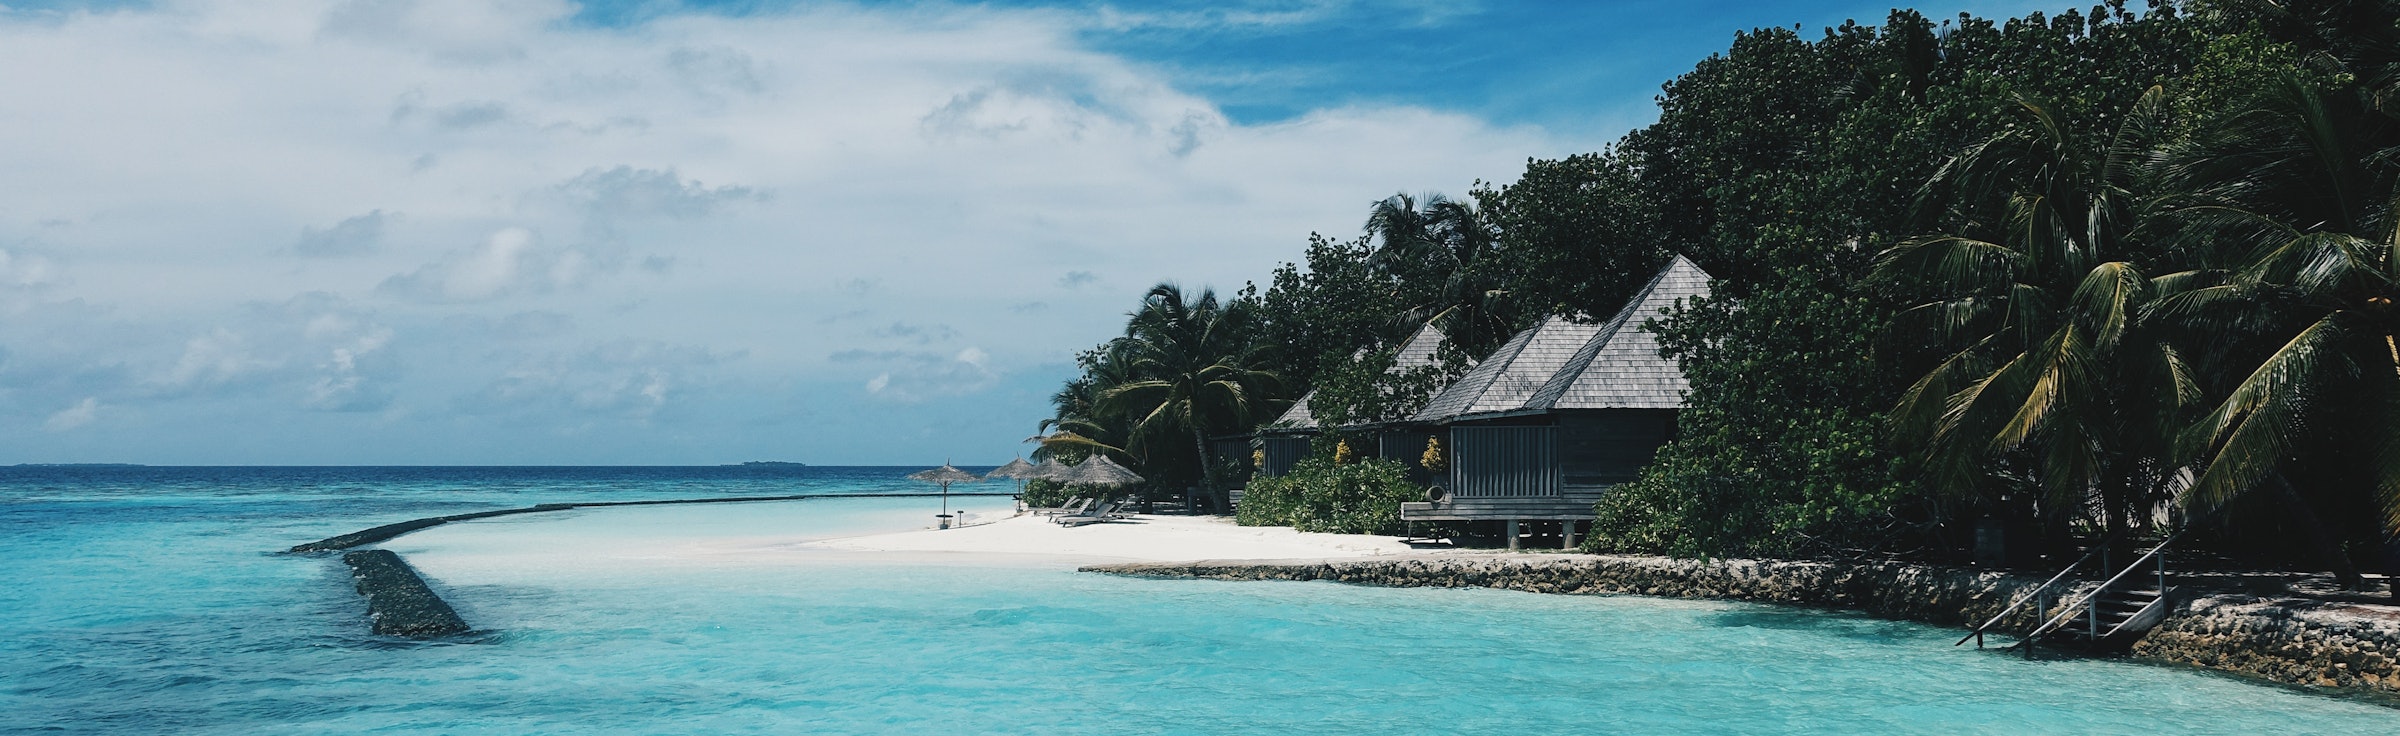 Atmosphere Kanifushi Maldives Vacations